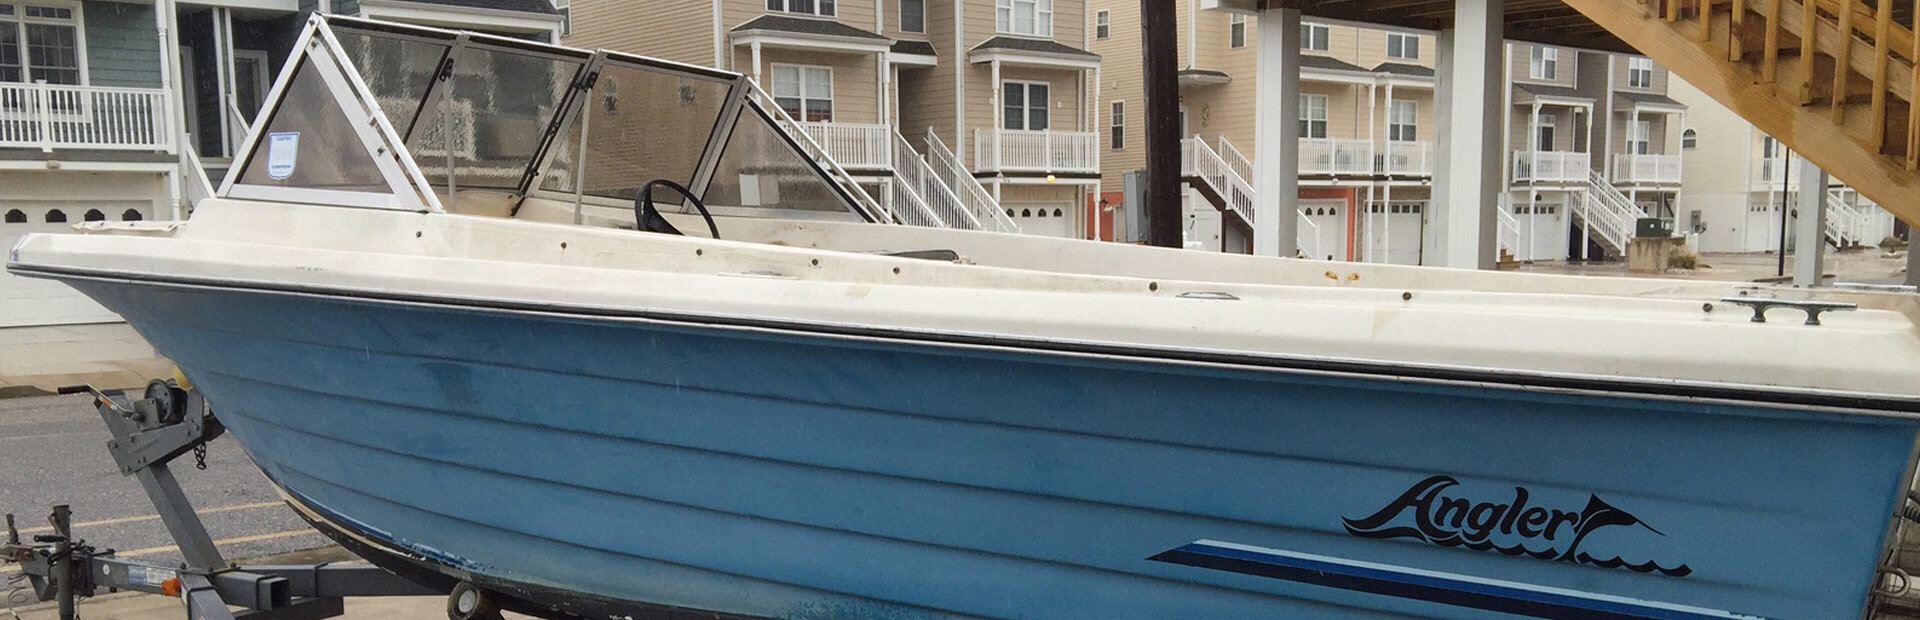 Donate Boat, Yacht or Jet Ski in Massachusetts - Sailboat Donations Too!